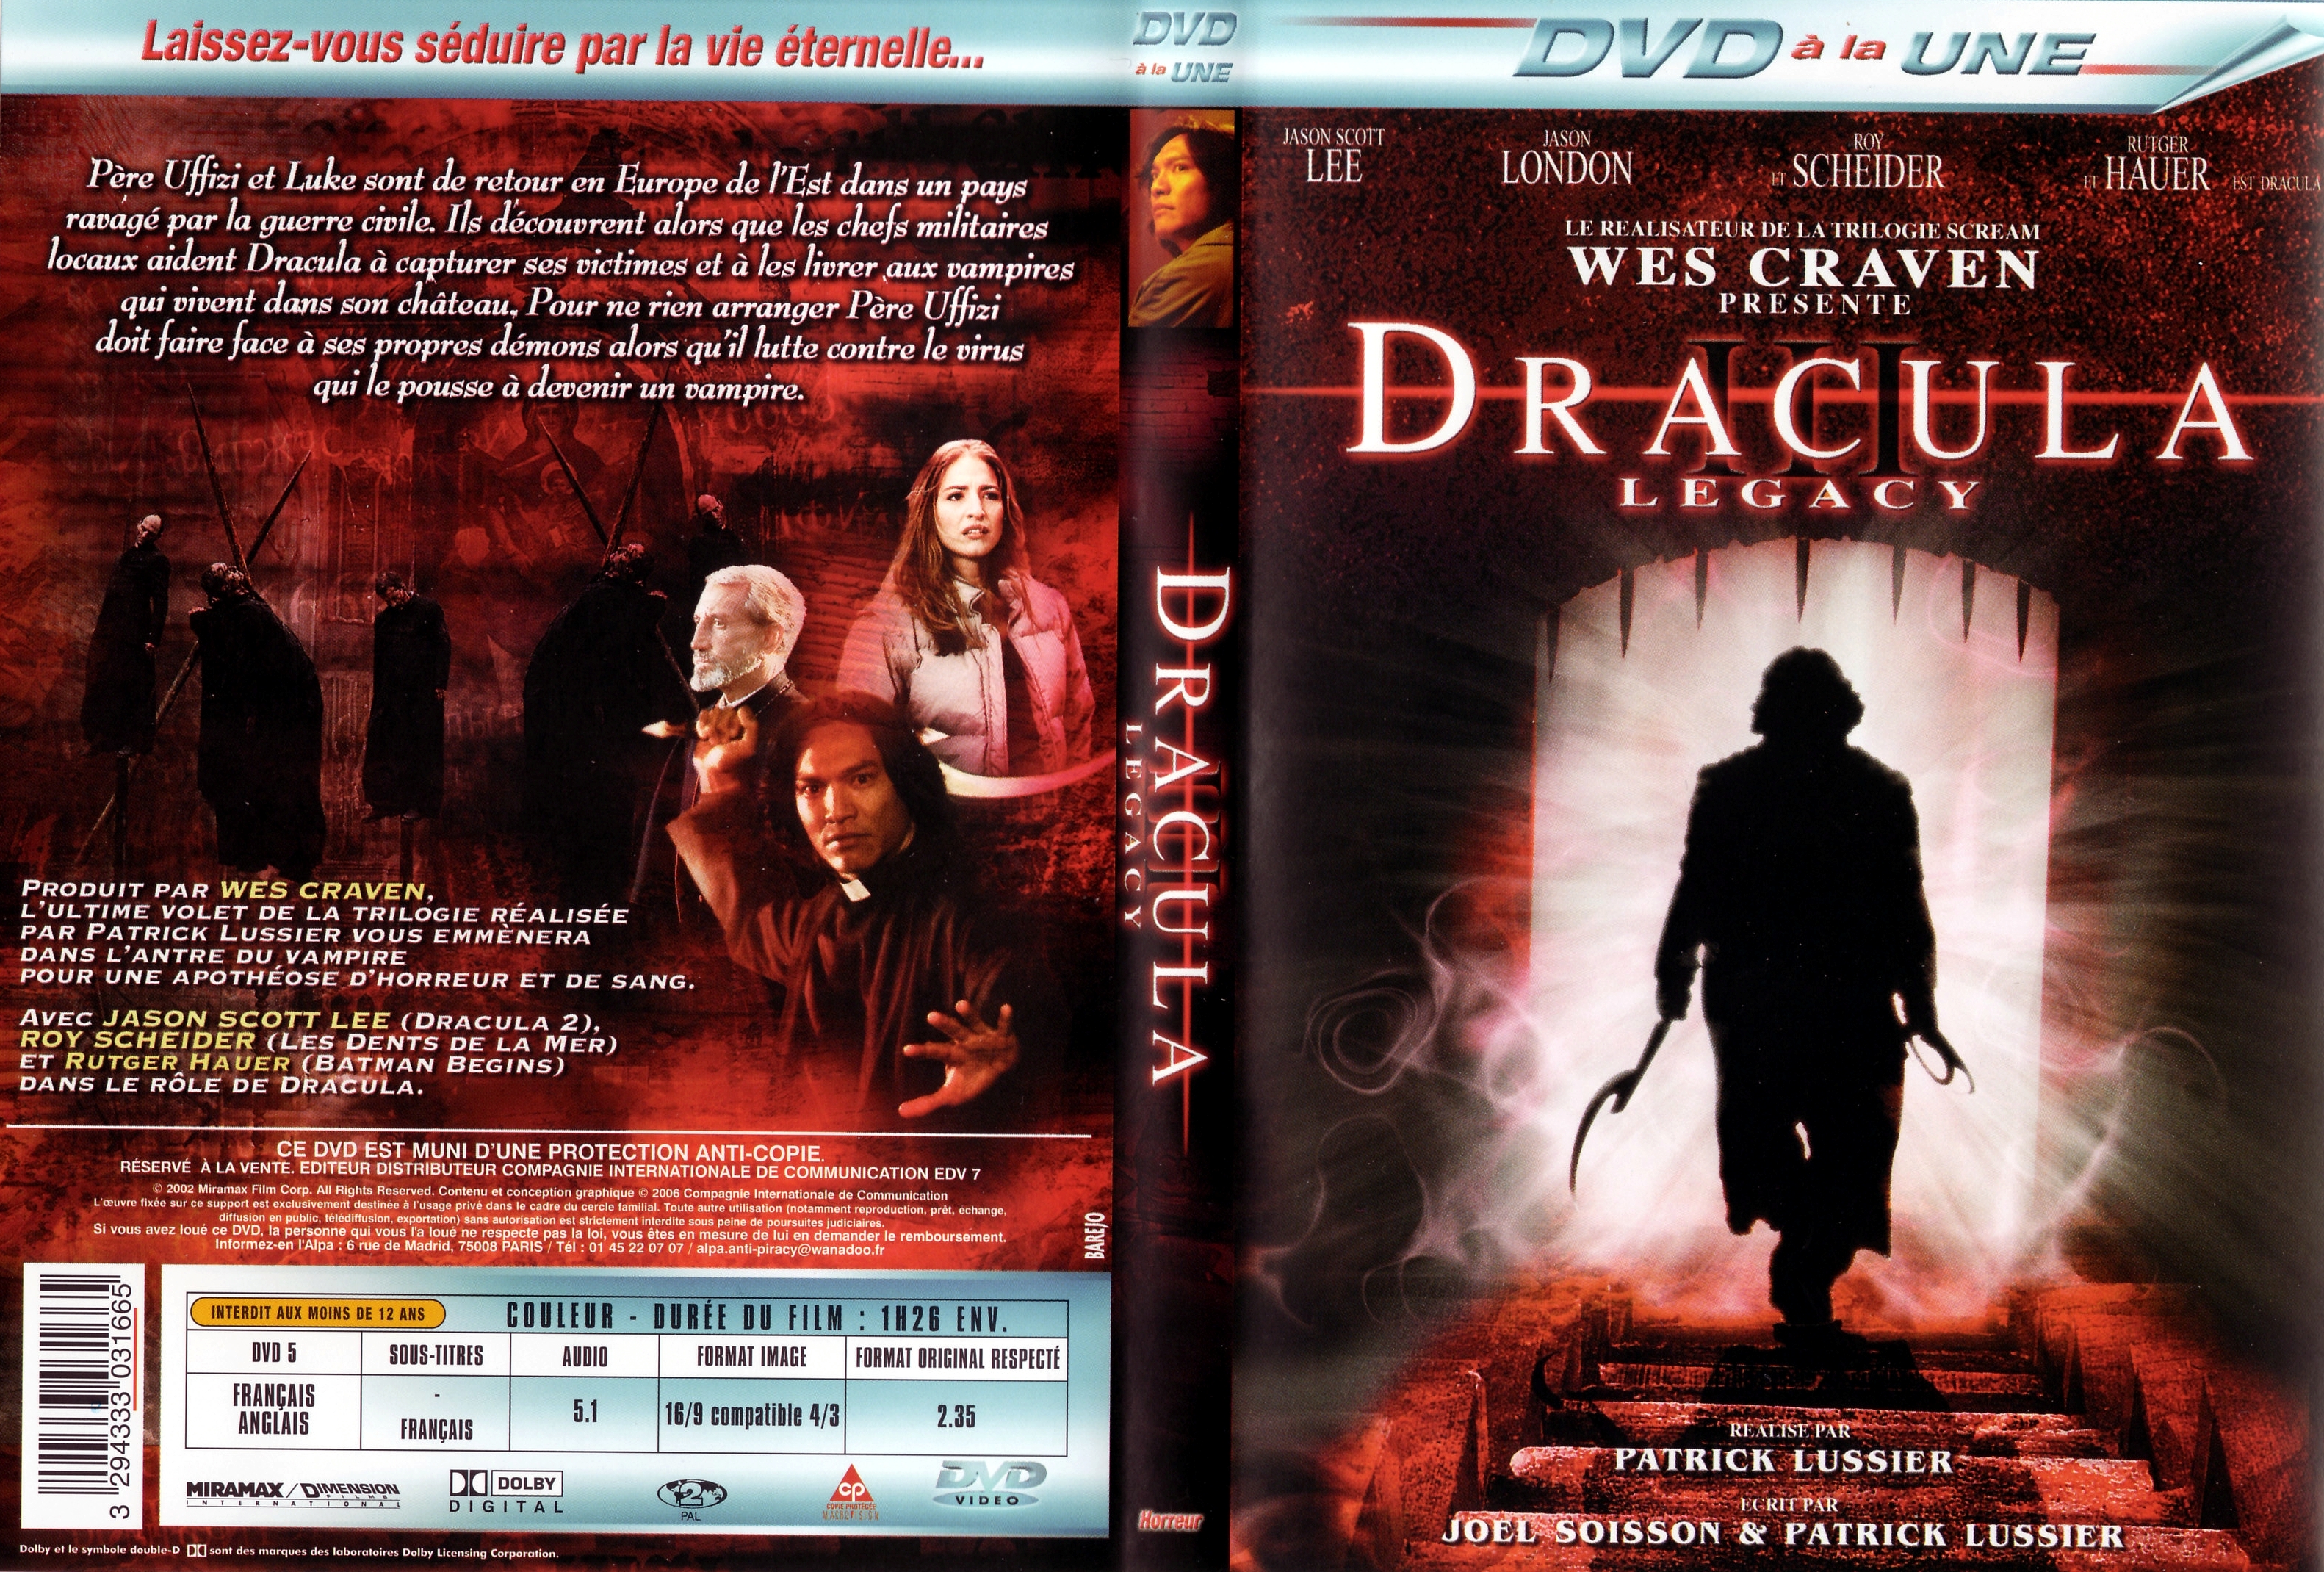 Jaquette DVD Dracula 3 legacy